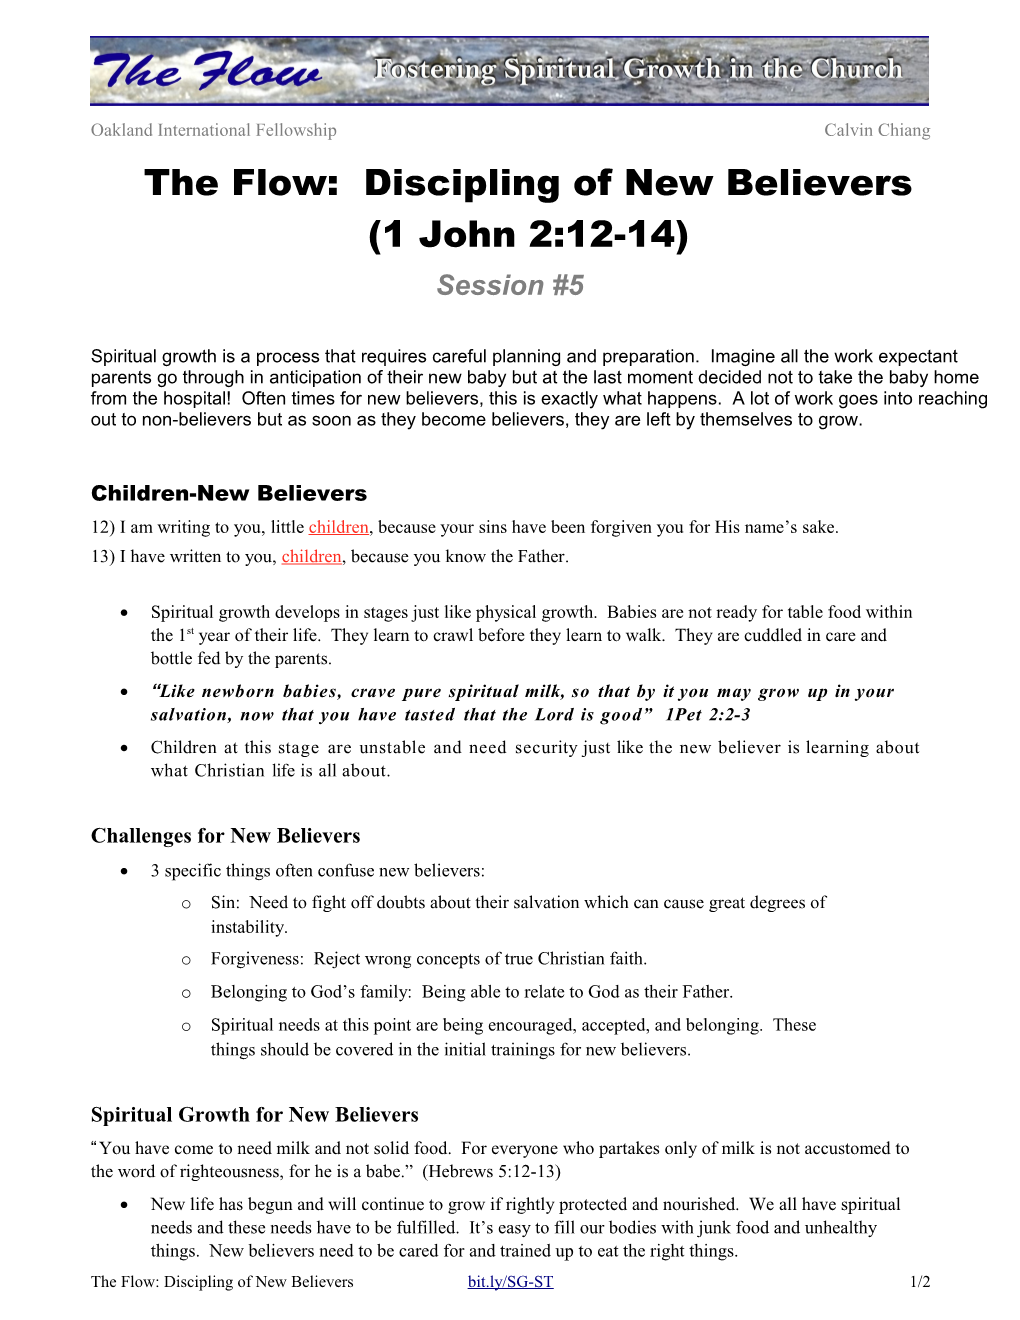 The Flow: Discipling of New Believers (1 John 2:12-14)